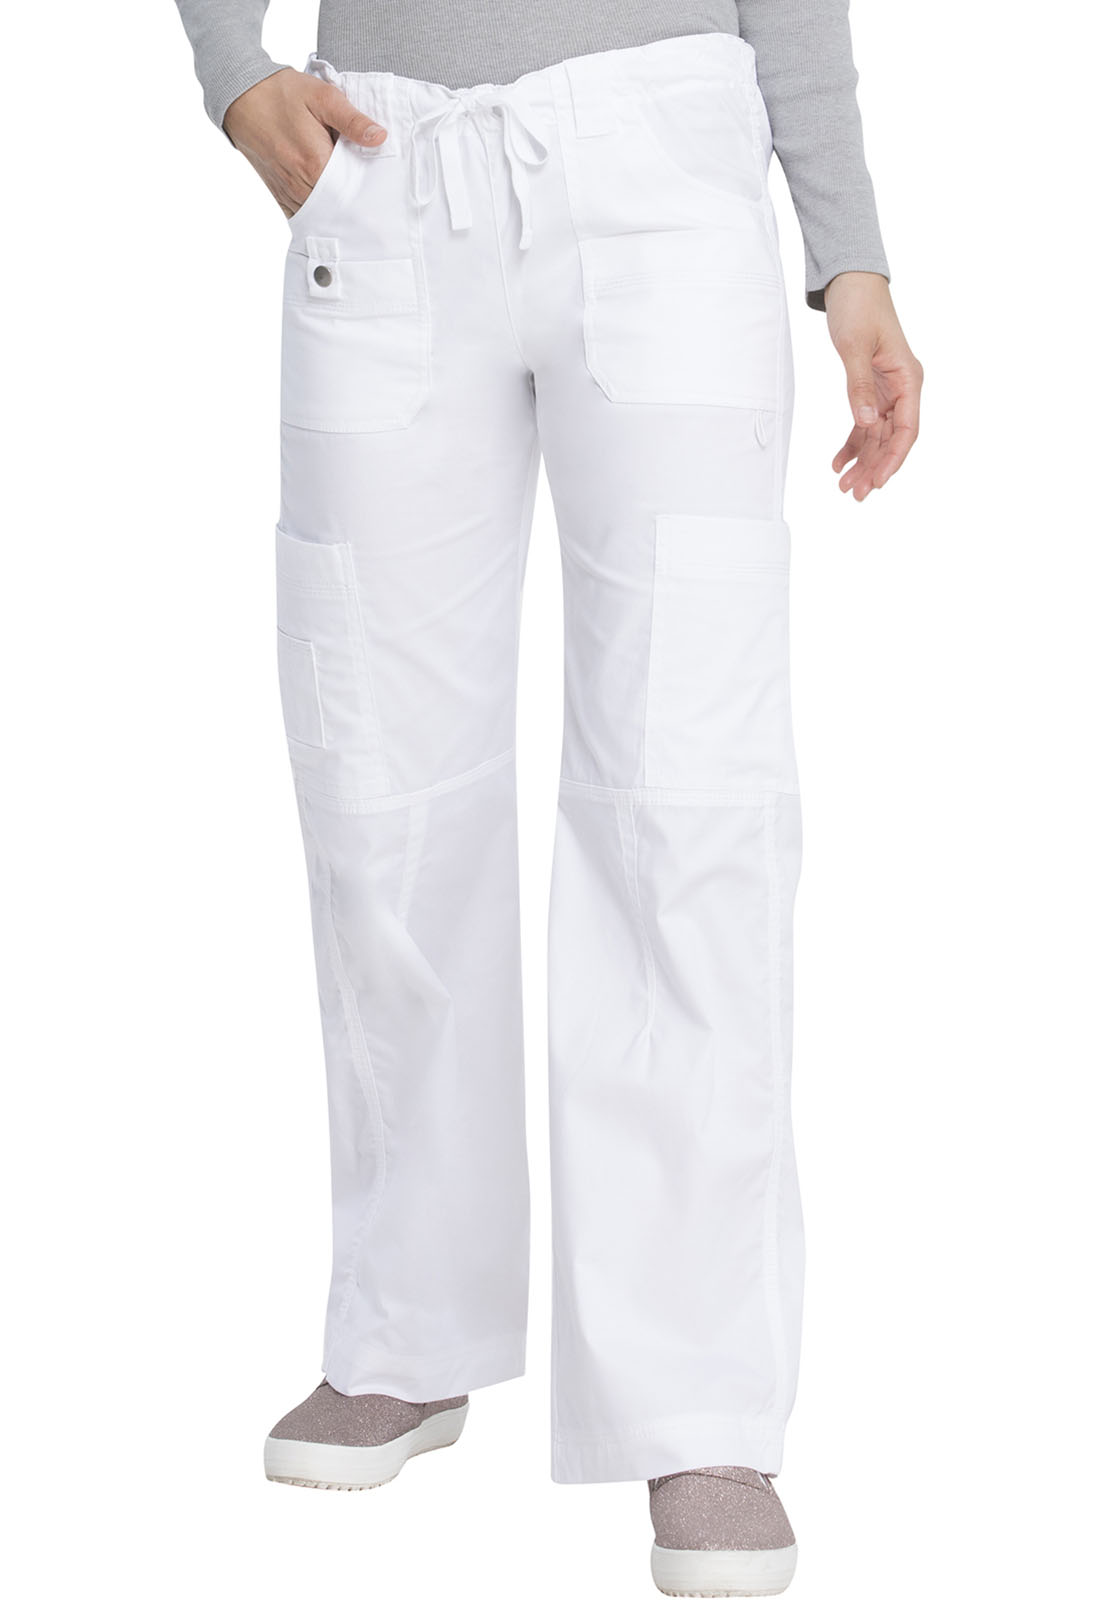 white cargo pants